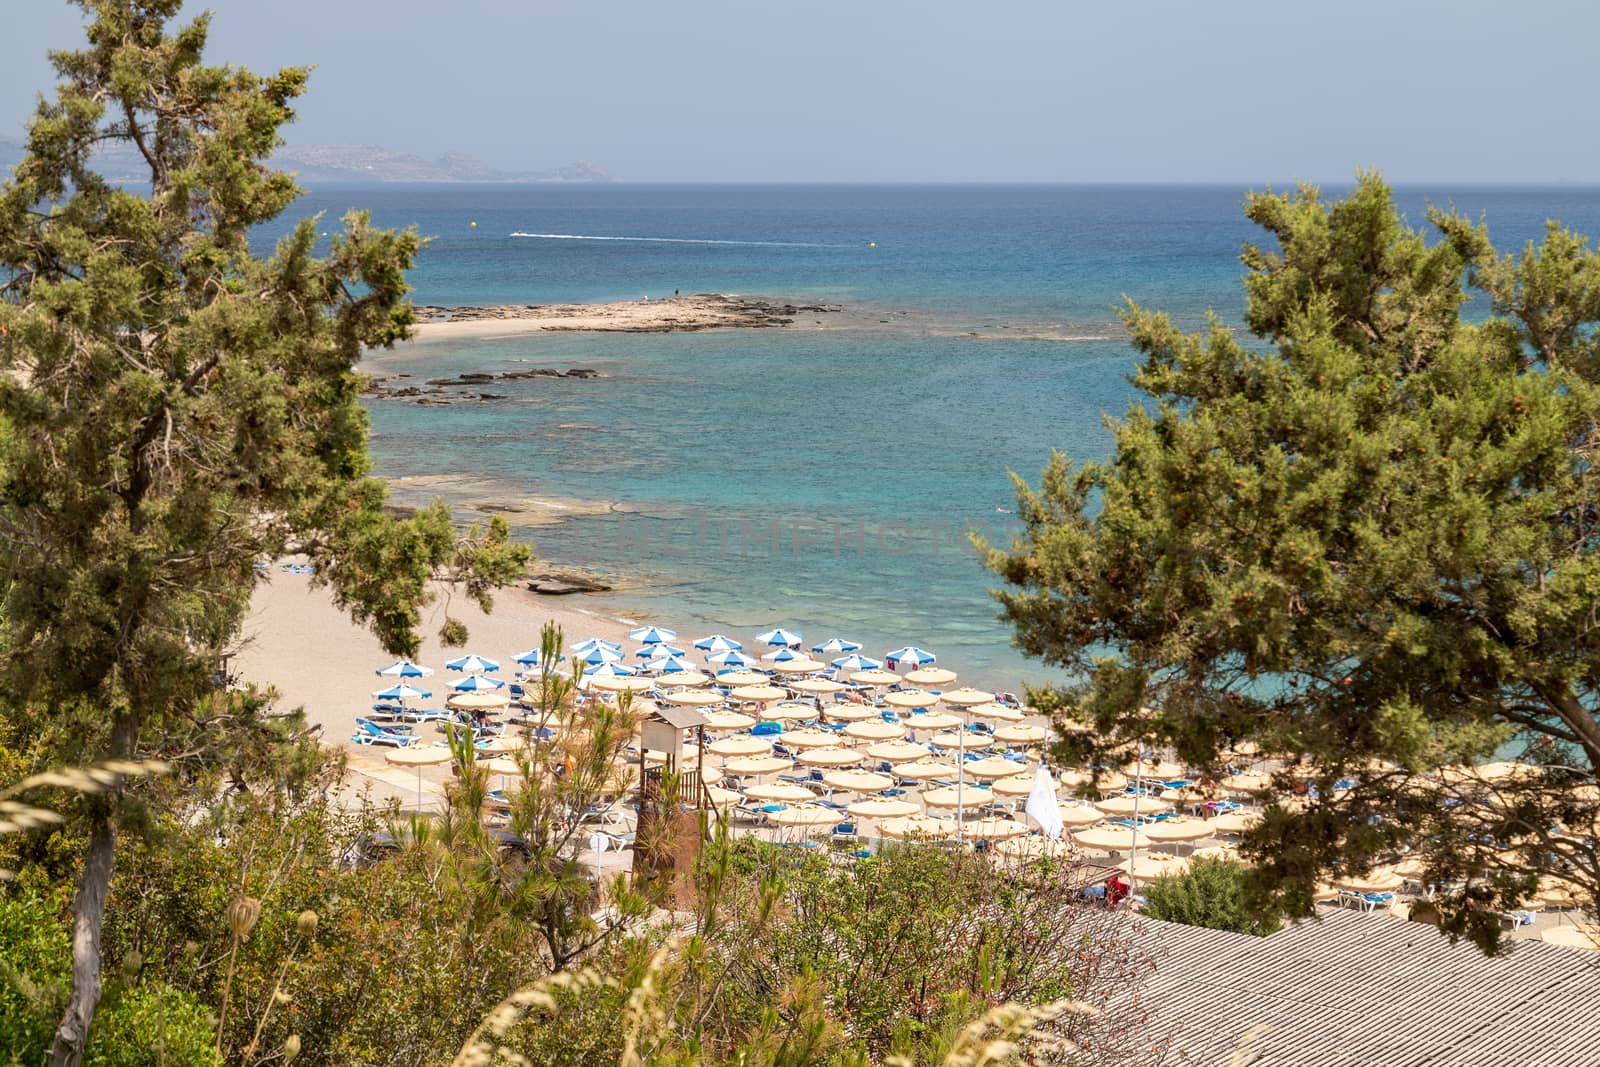 Scenic view at the coastline of Kiotari on Rhodes island, Greece with gravel beach 